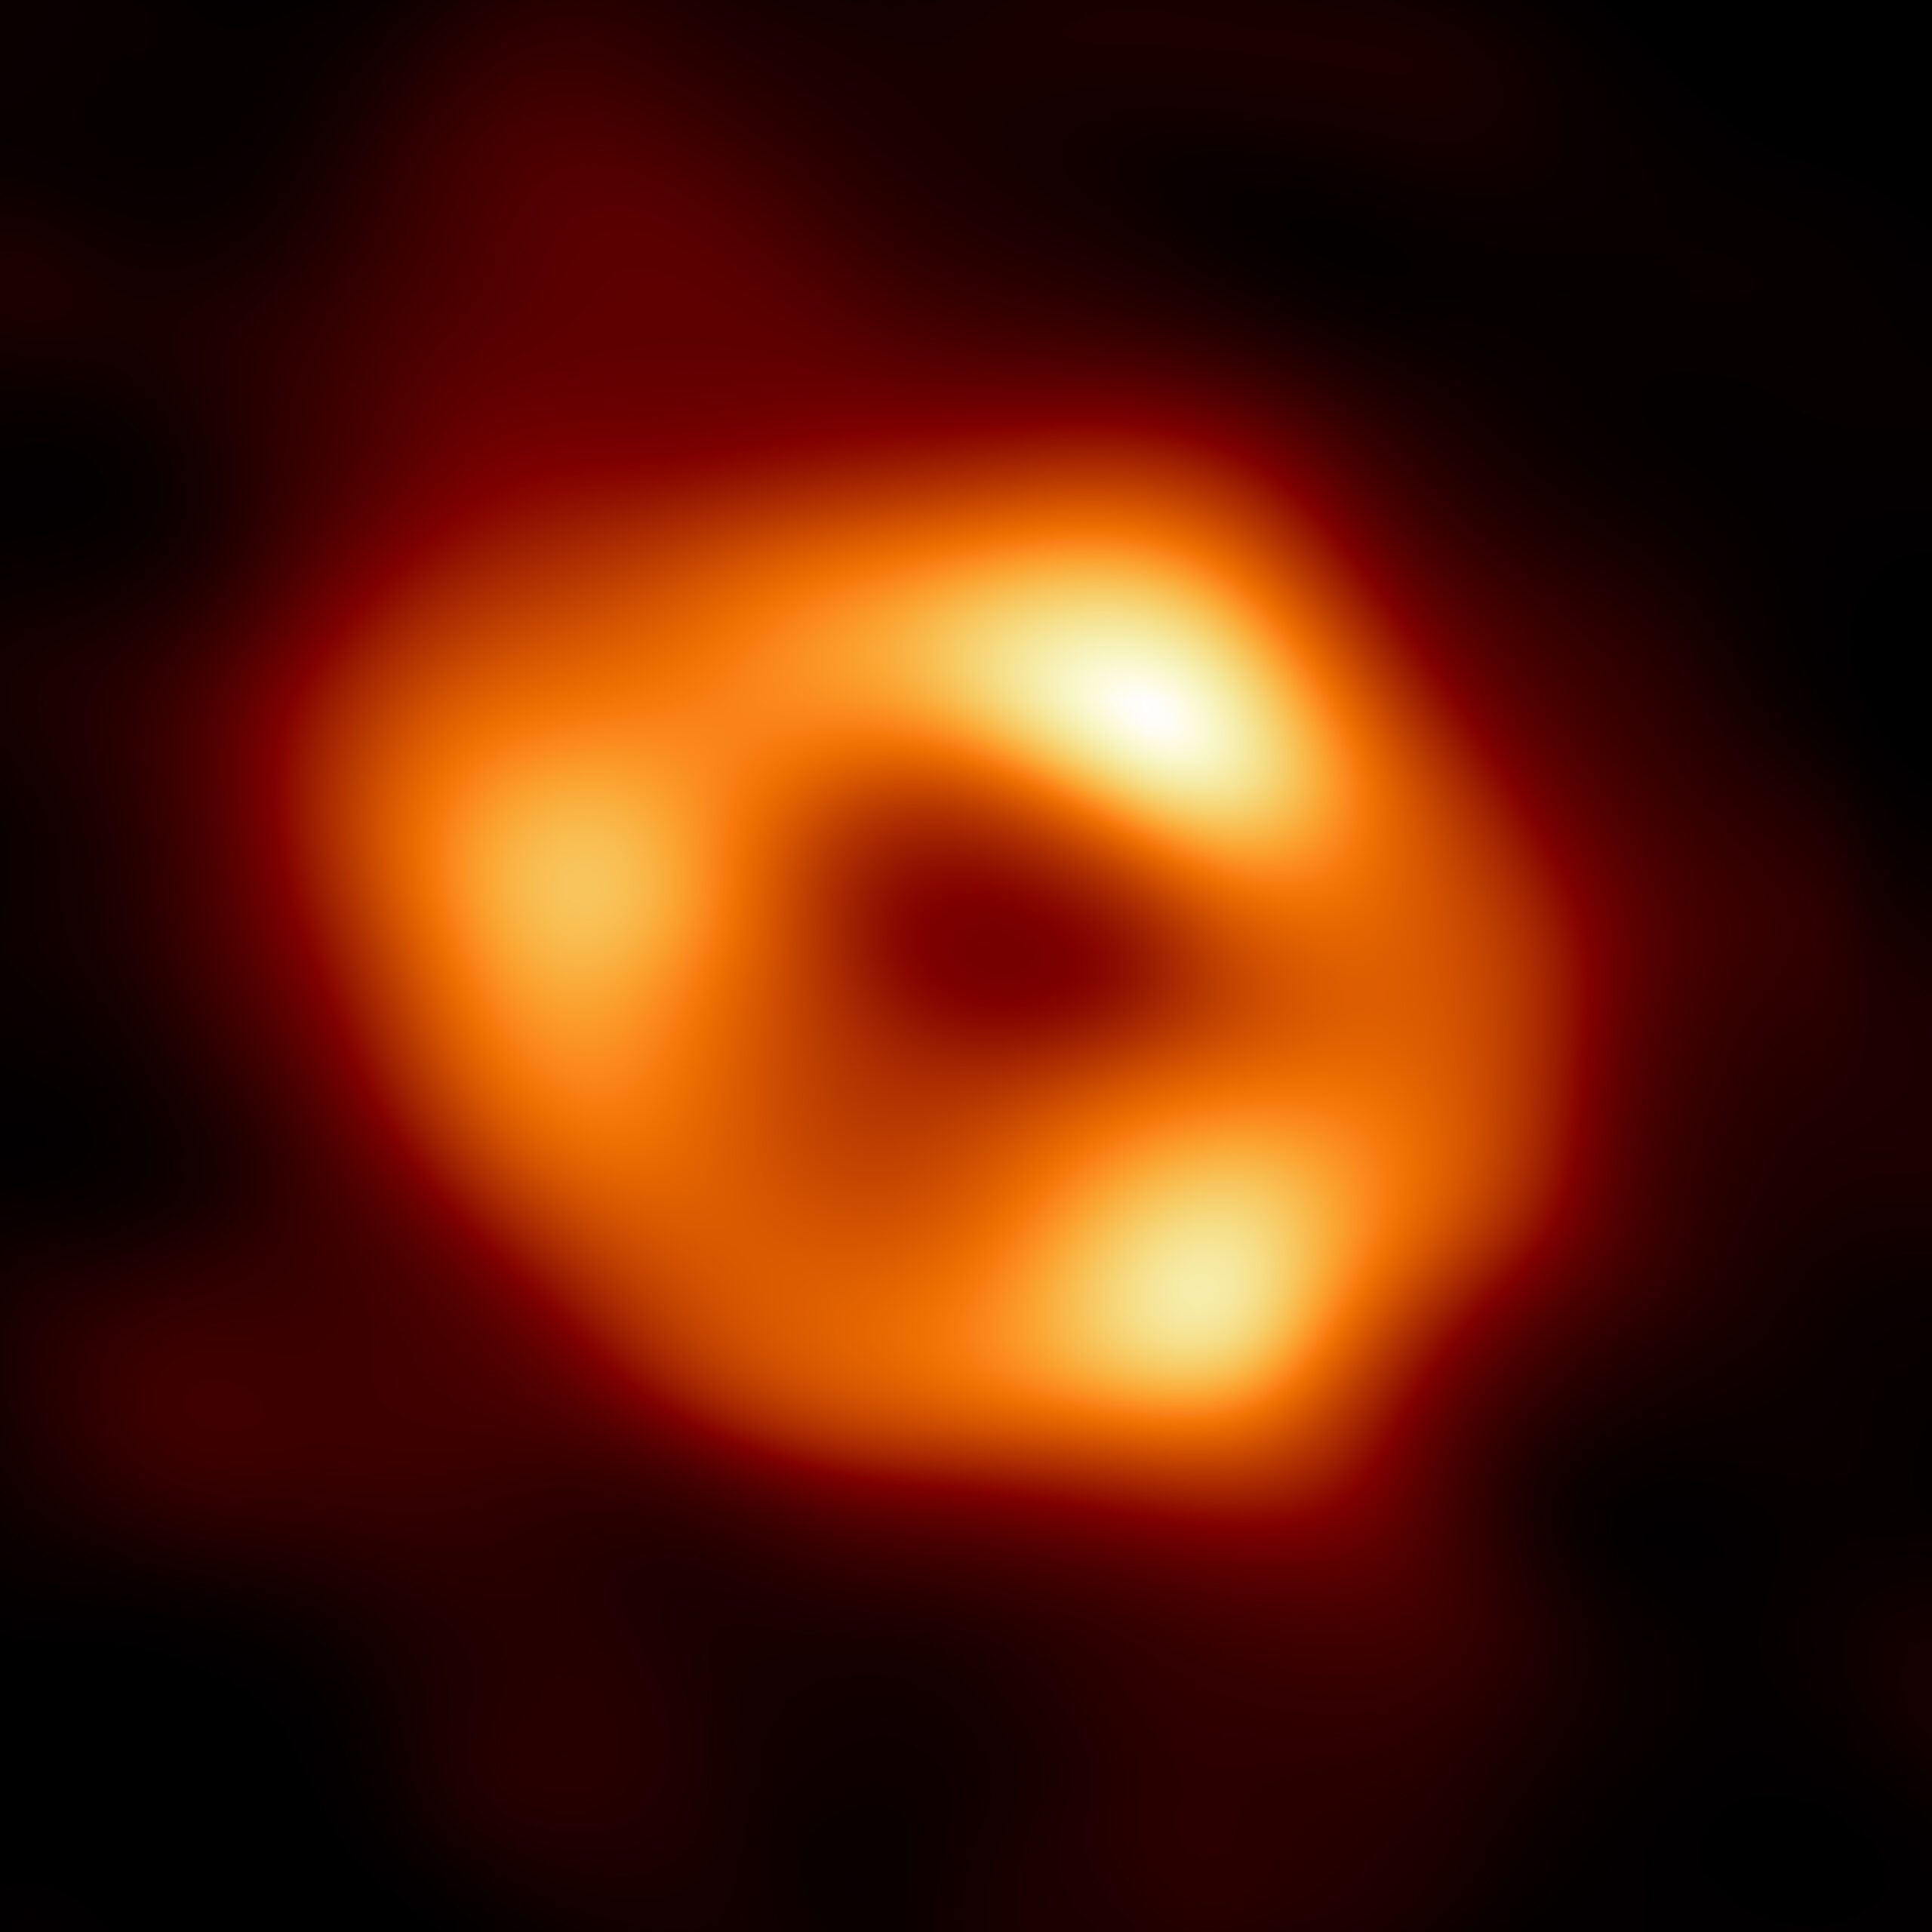 Saggitarius A* – Supermassive Black Hole Gets Captured